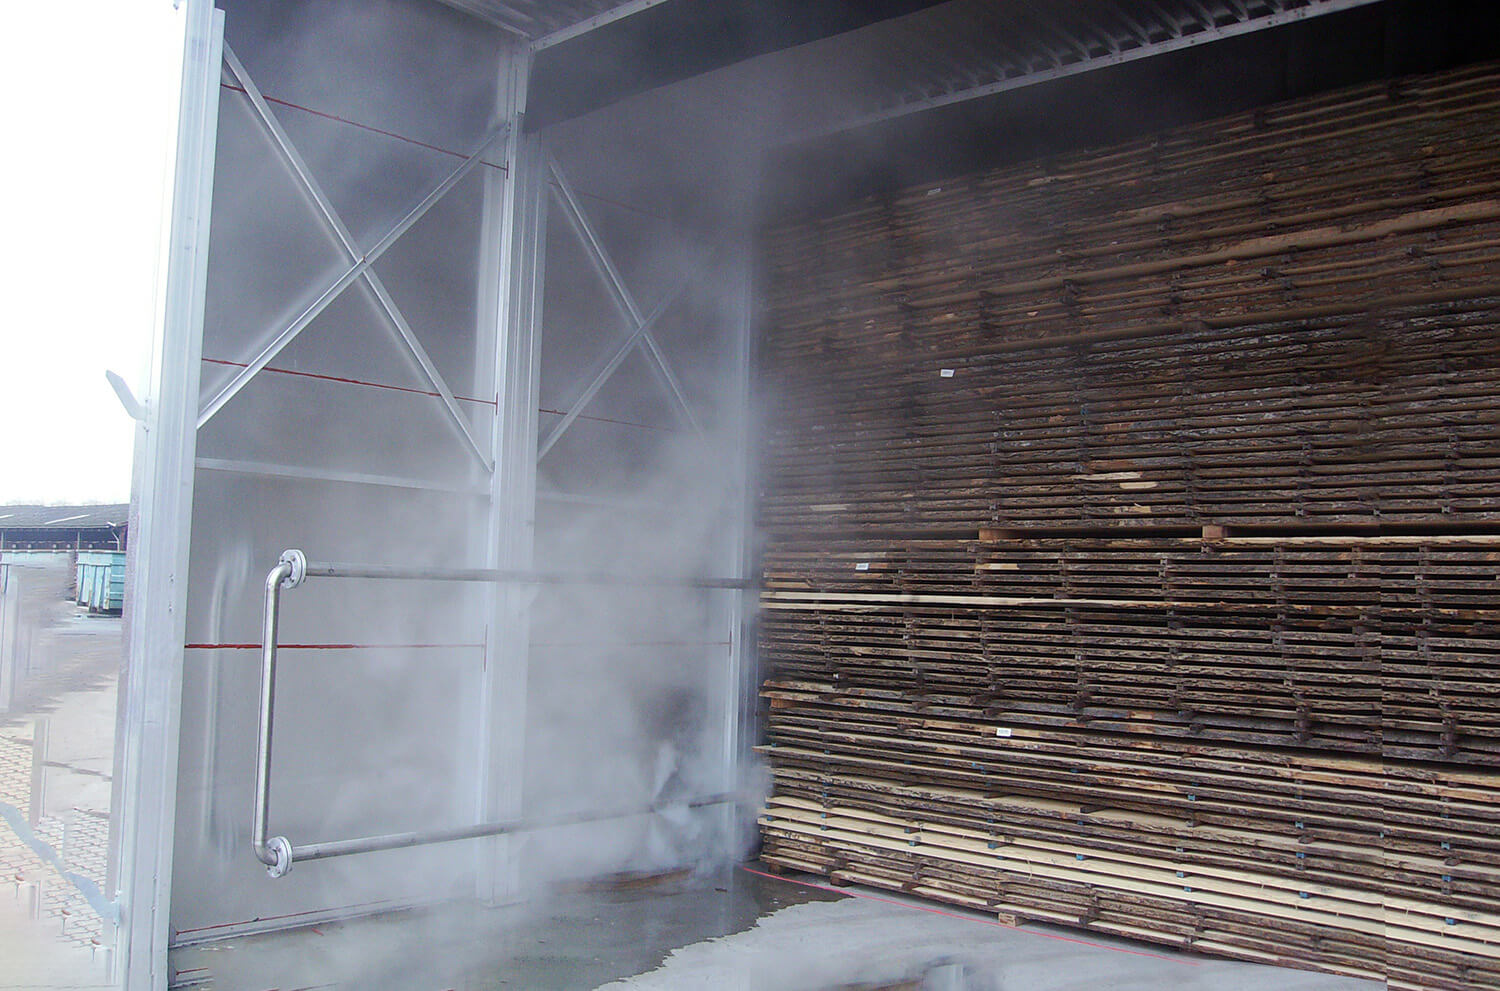 Incomac VAP wood steaming chamber